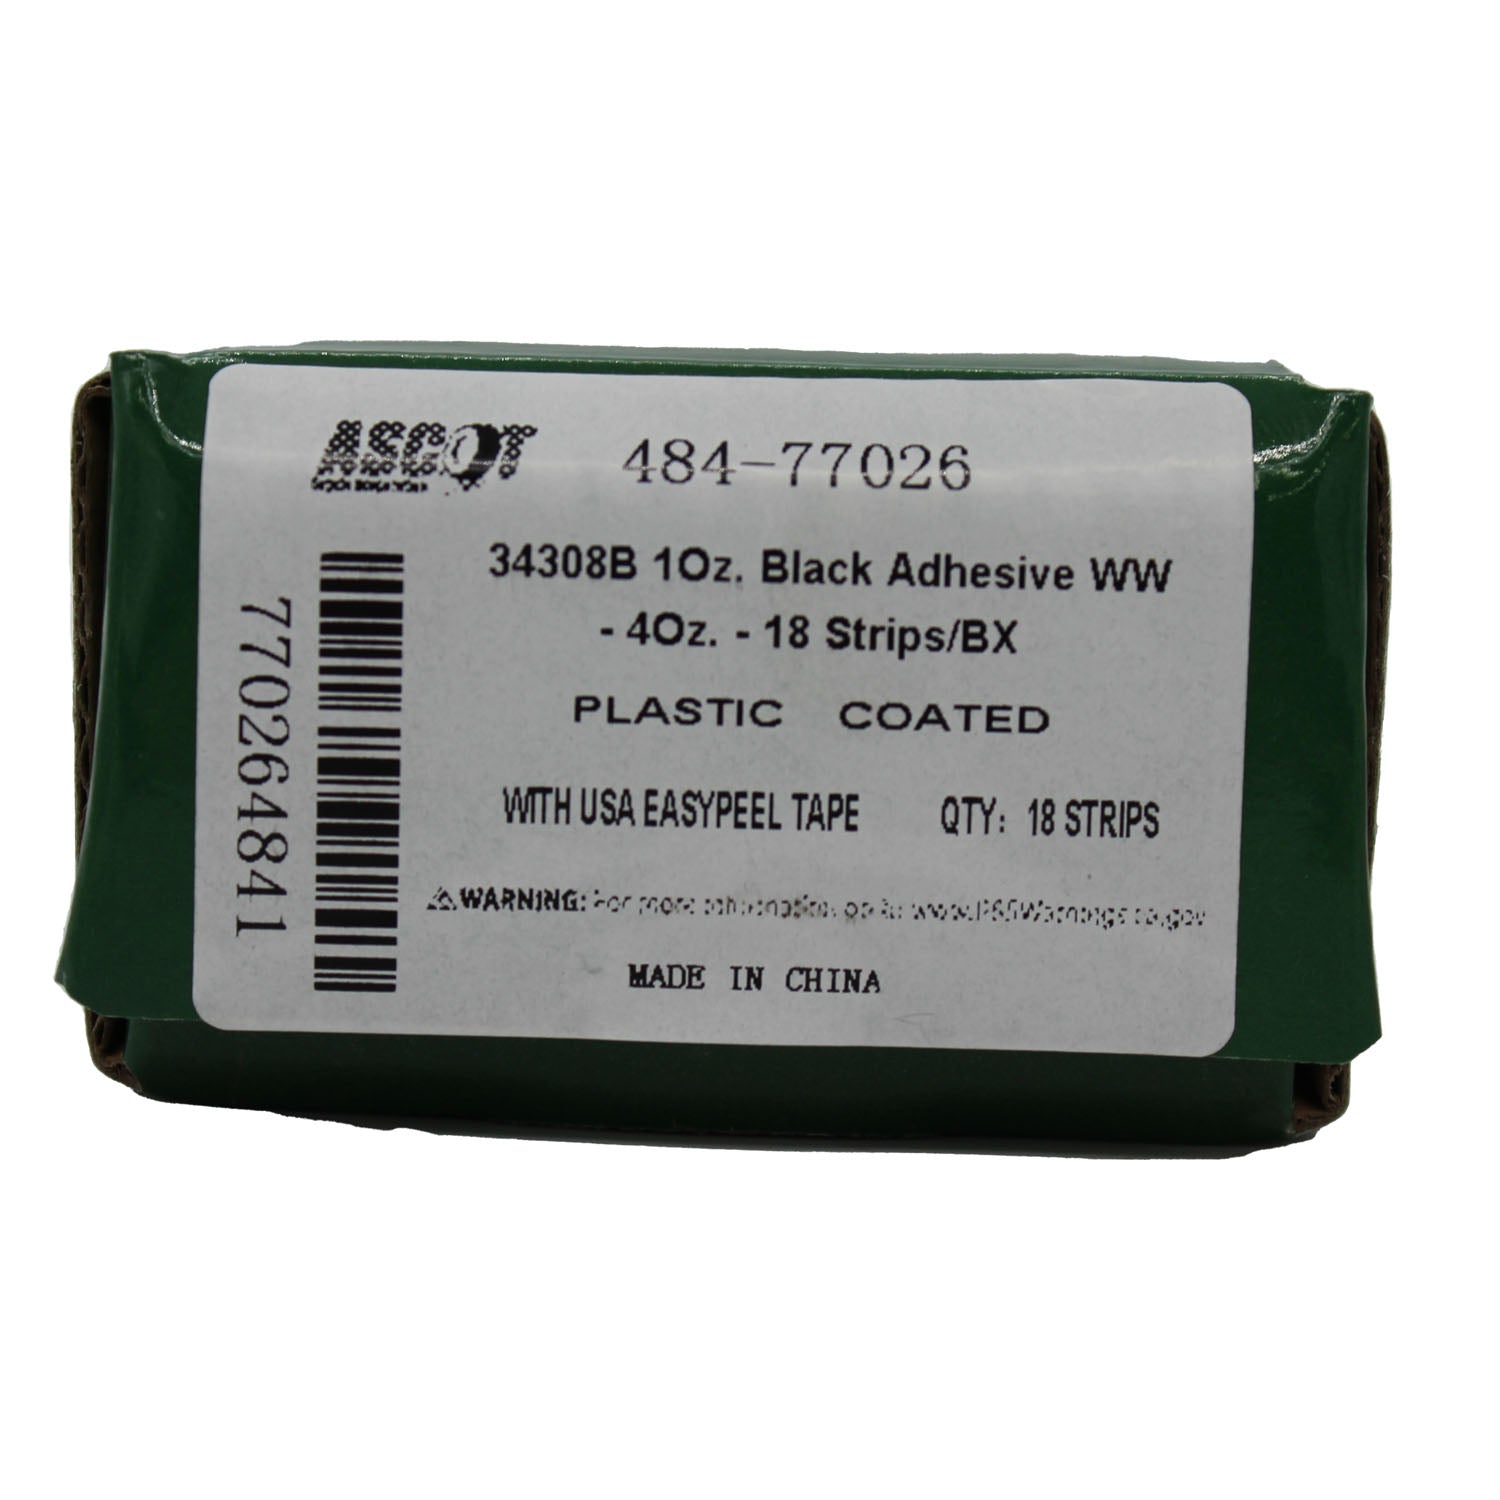 Ascot 484-77026 Premium Steel Adhesive Tape Weight Black 1 oz - Box of 18 Strips